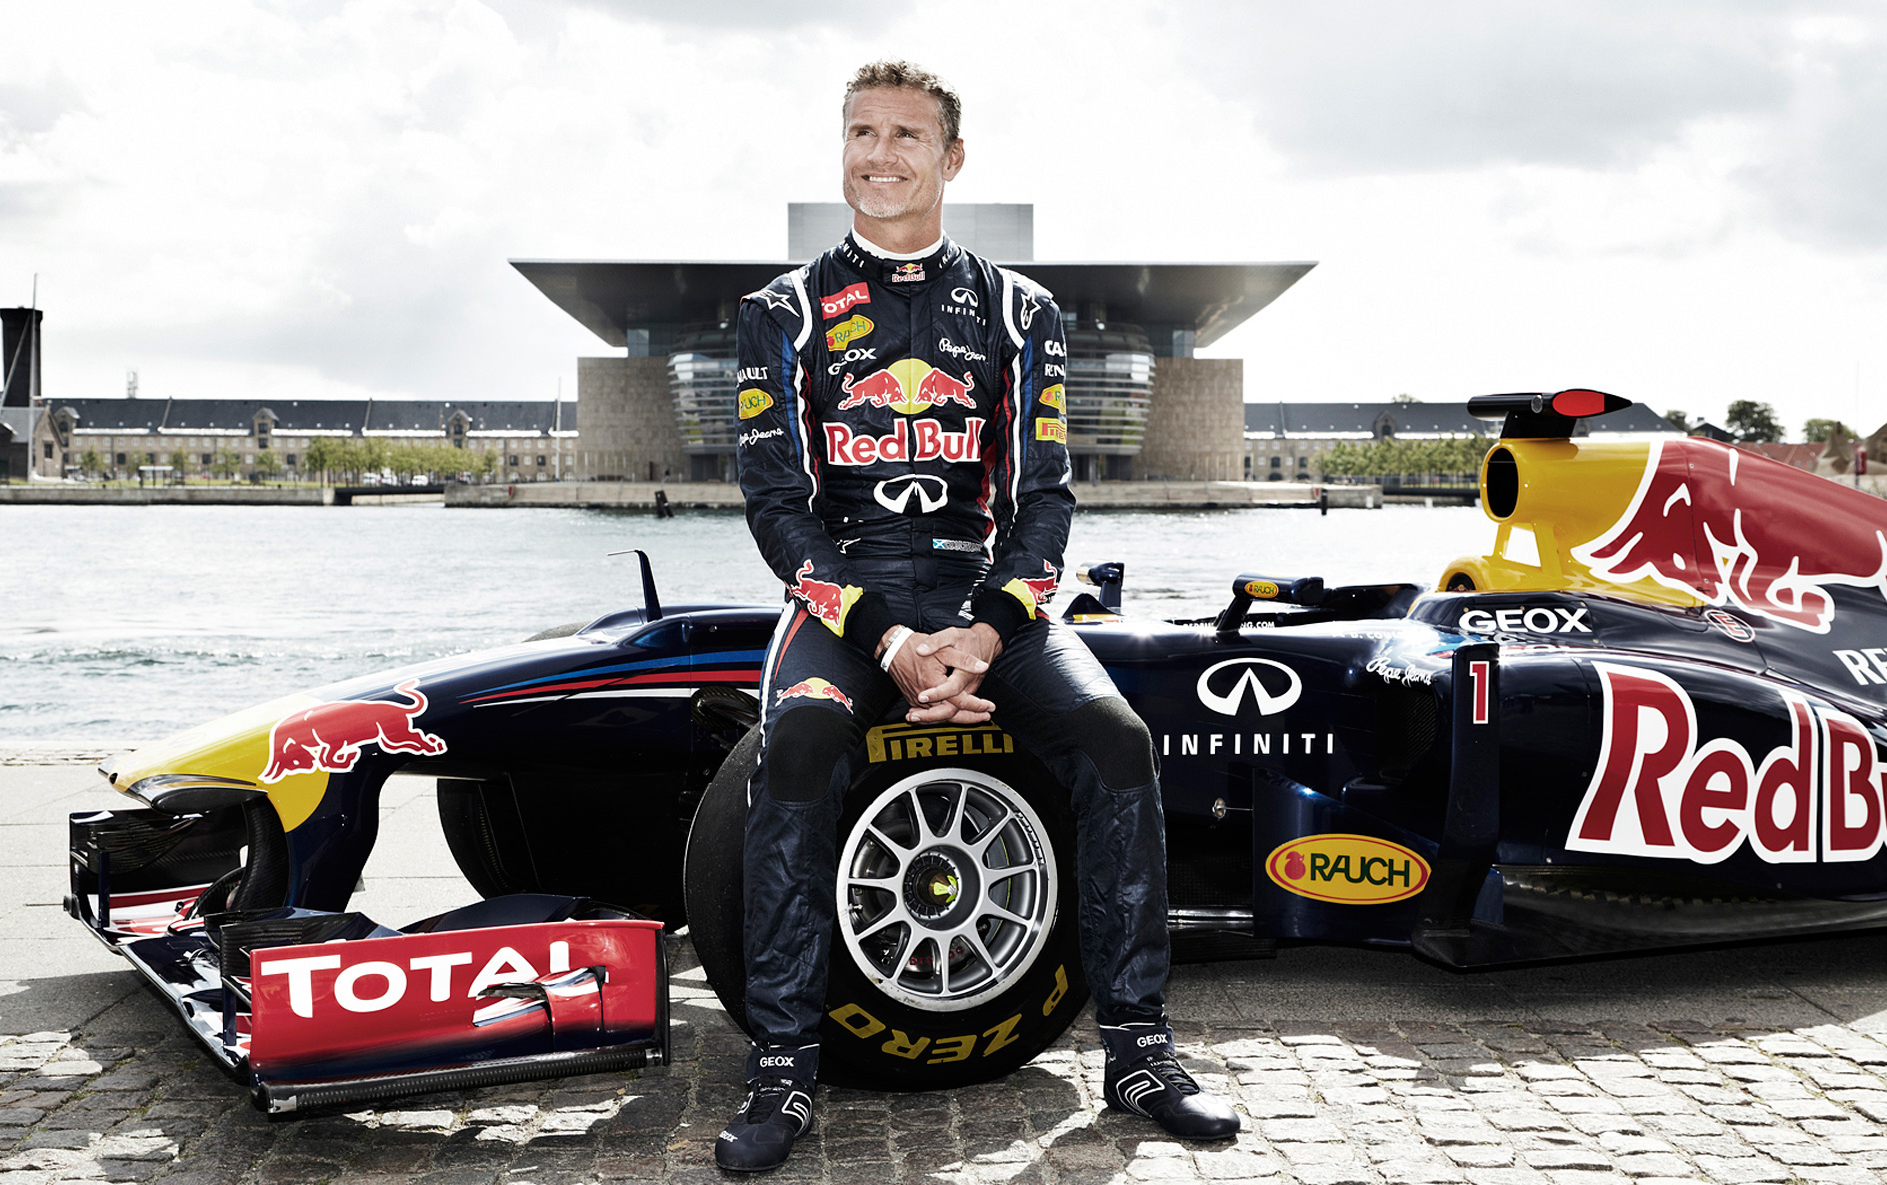 David Coulthard, Formula 1 driver